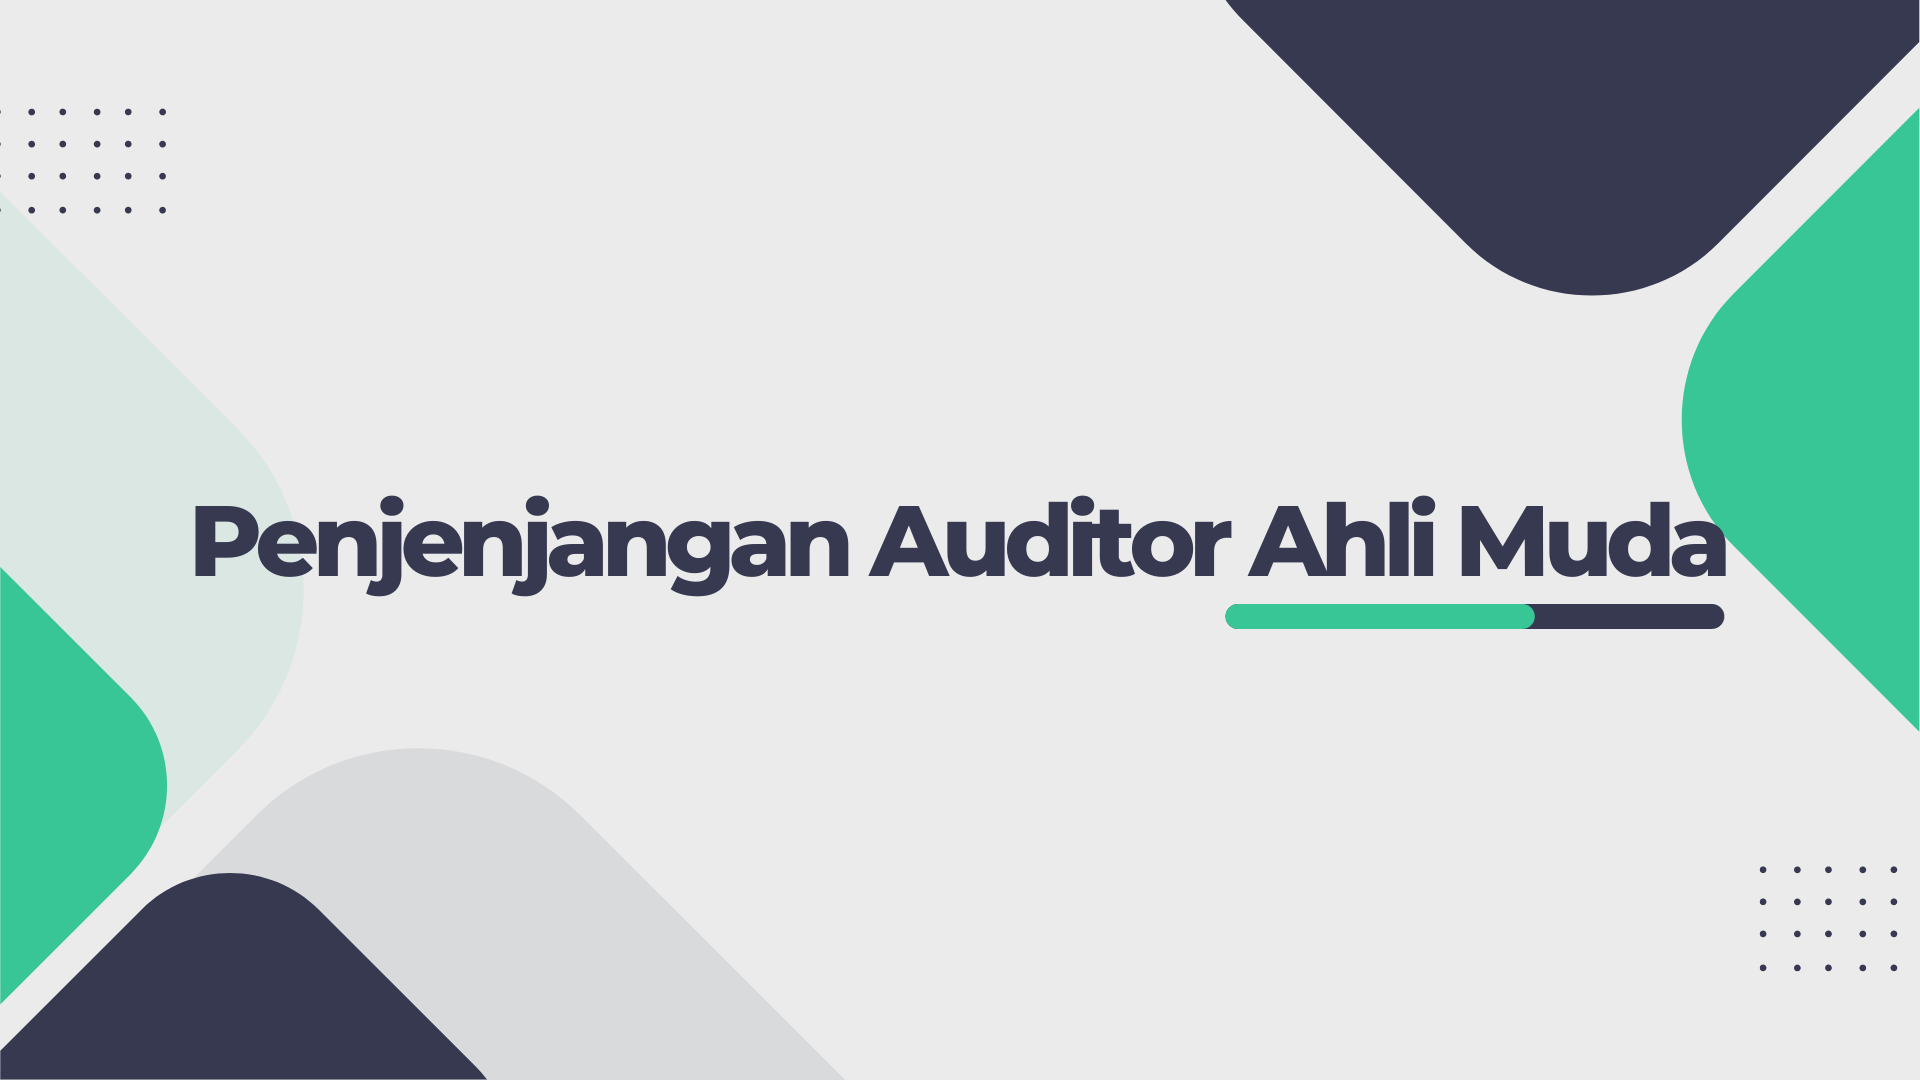 Penjenjangan Auditor Ahli Muda | 0123 B